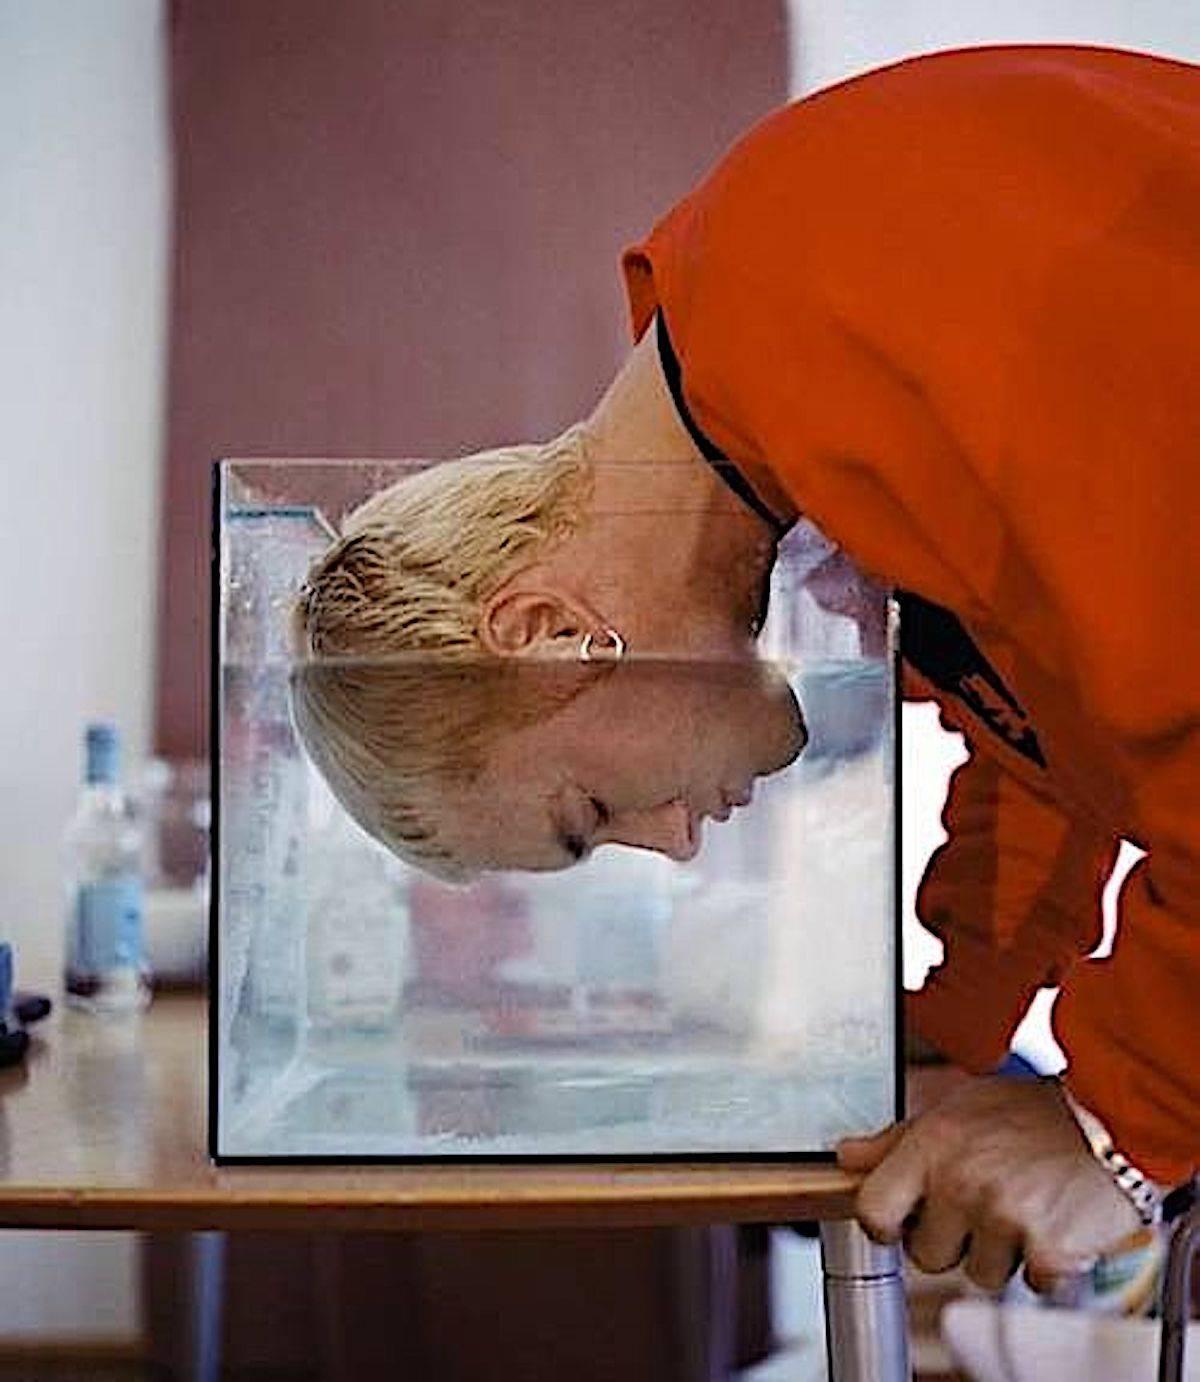 Chris Buck Figurative Photograph – Eminem 1999 (ungerahmt) Foto figurativ zeitgenössisches rotes Porträt